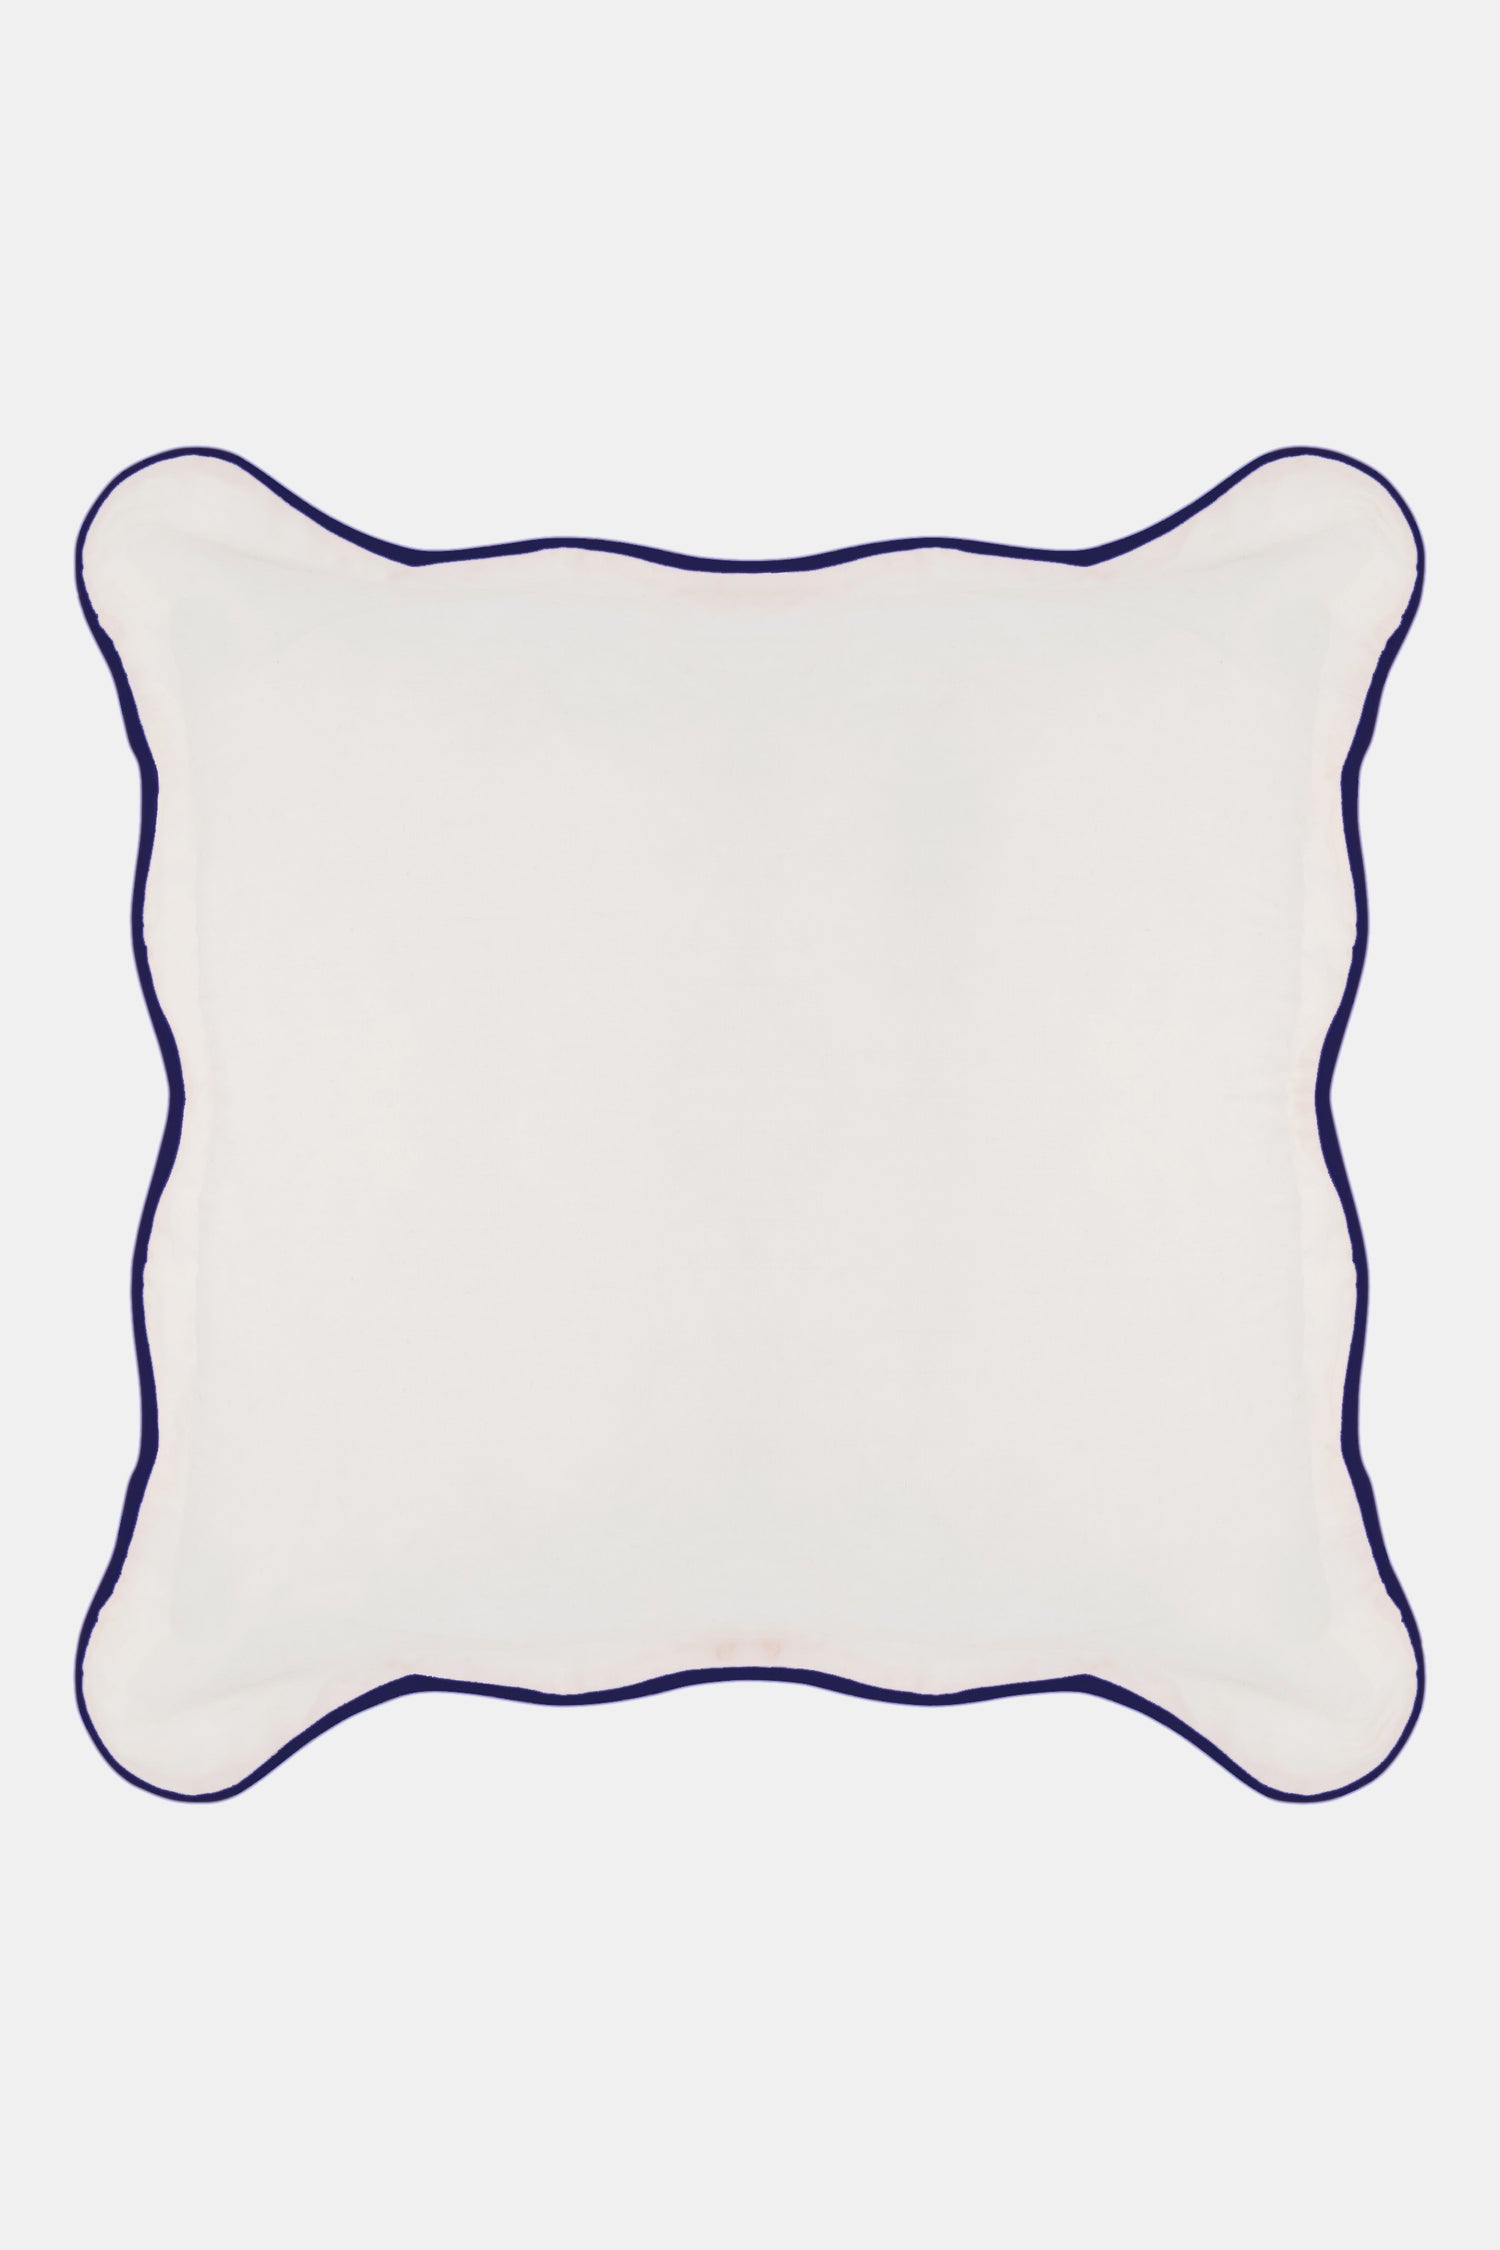 Roller Rabbit Scalloped Edge Decorative Pillow